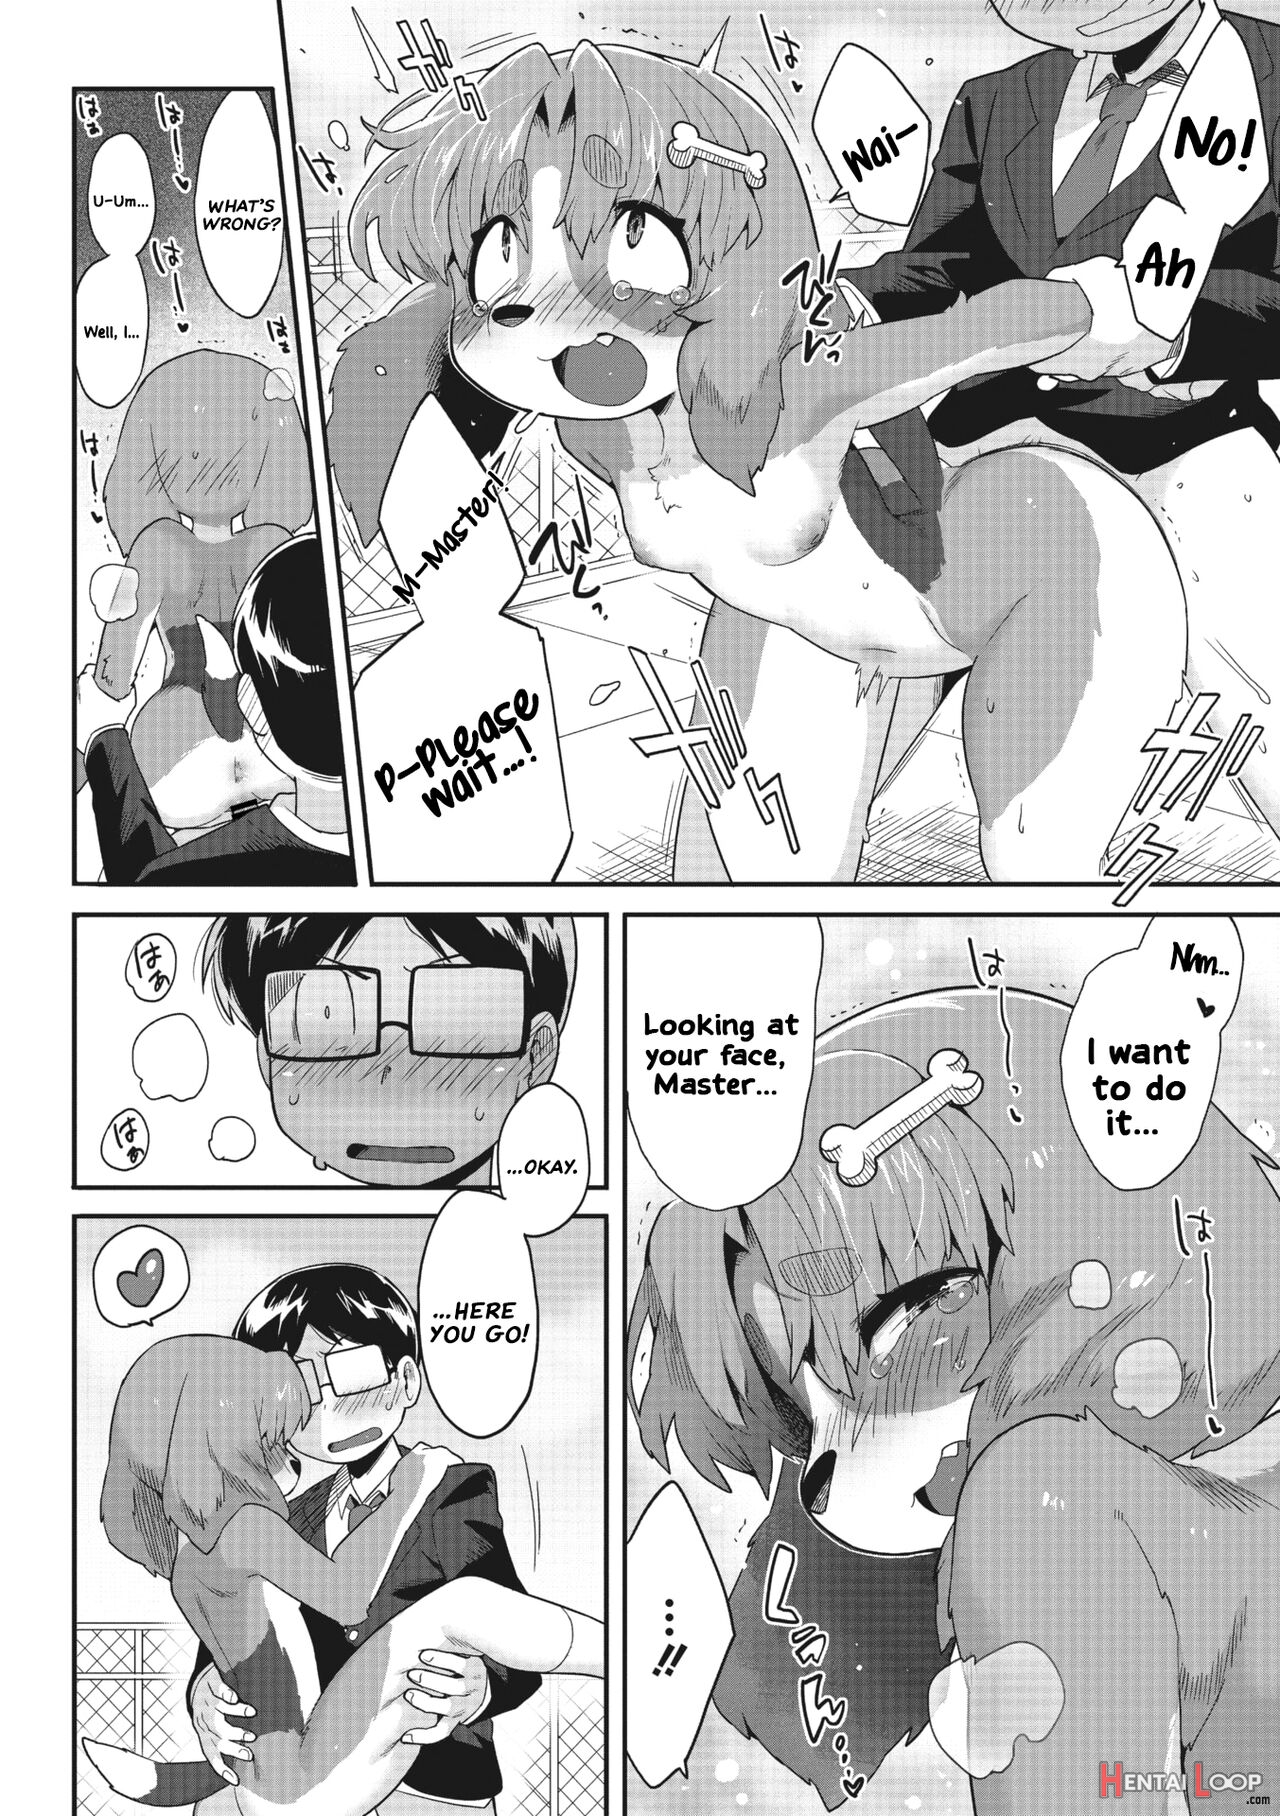 Goshujin-sama!! page 24